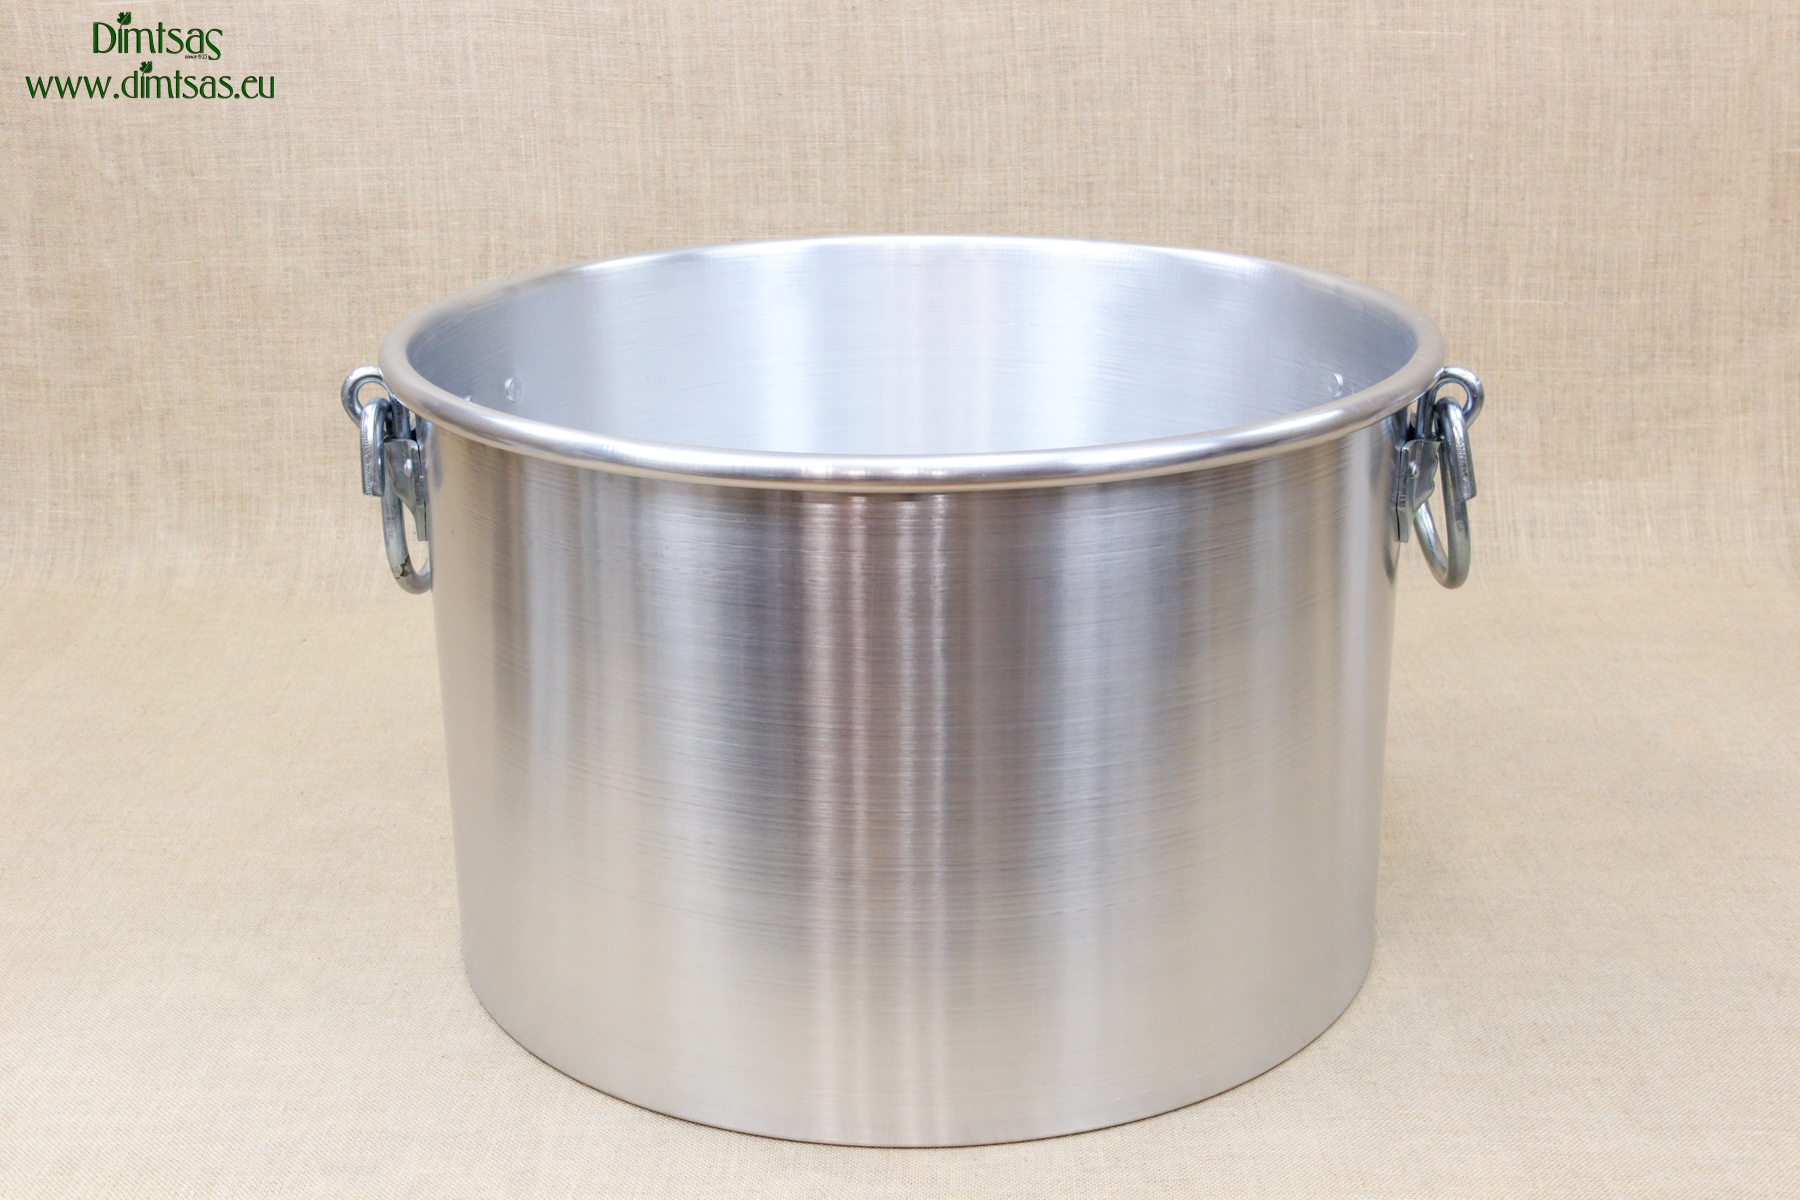 Aluminum Cookware, Product categories